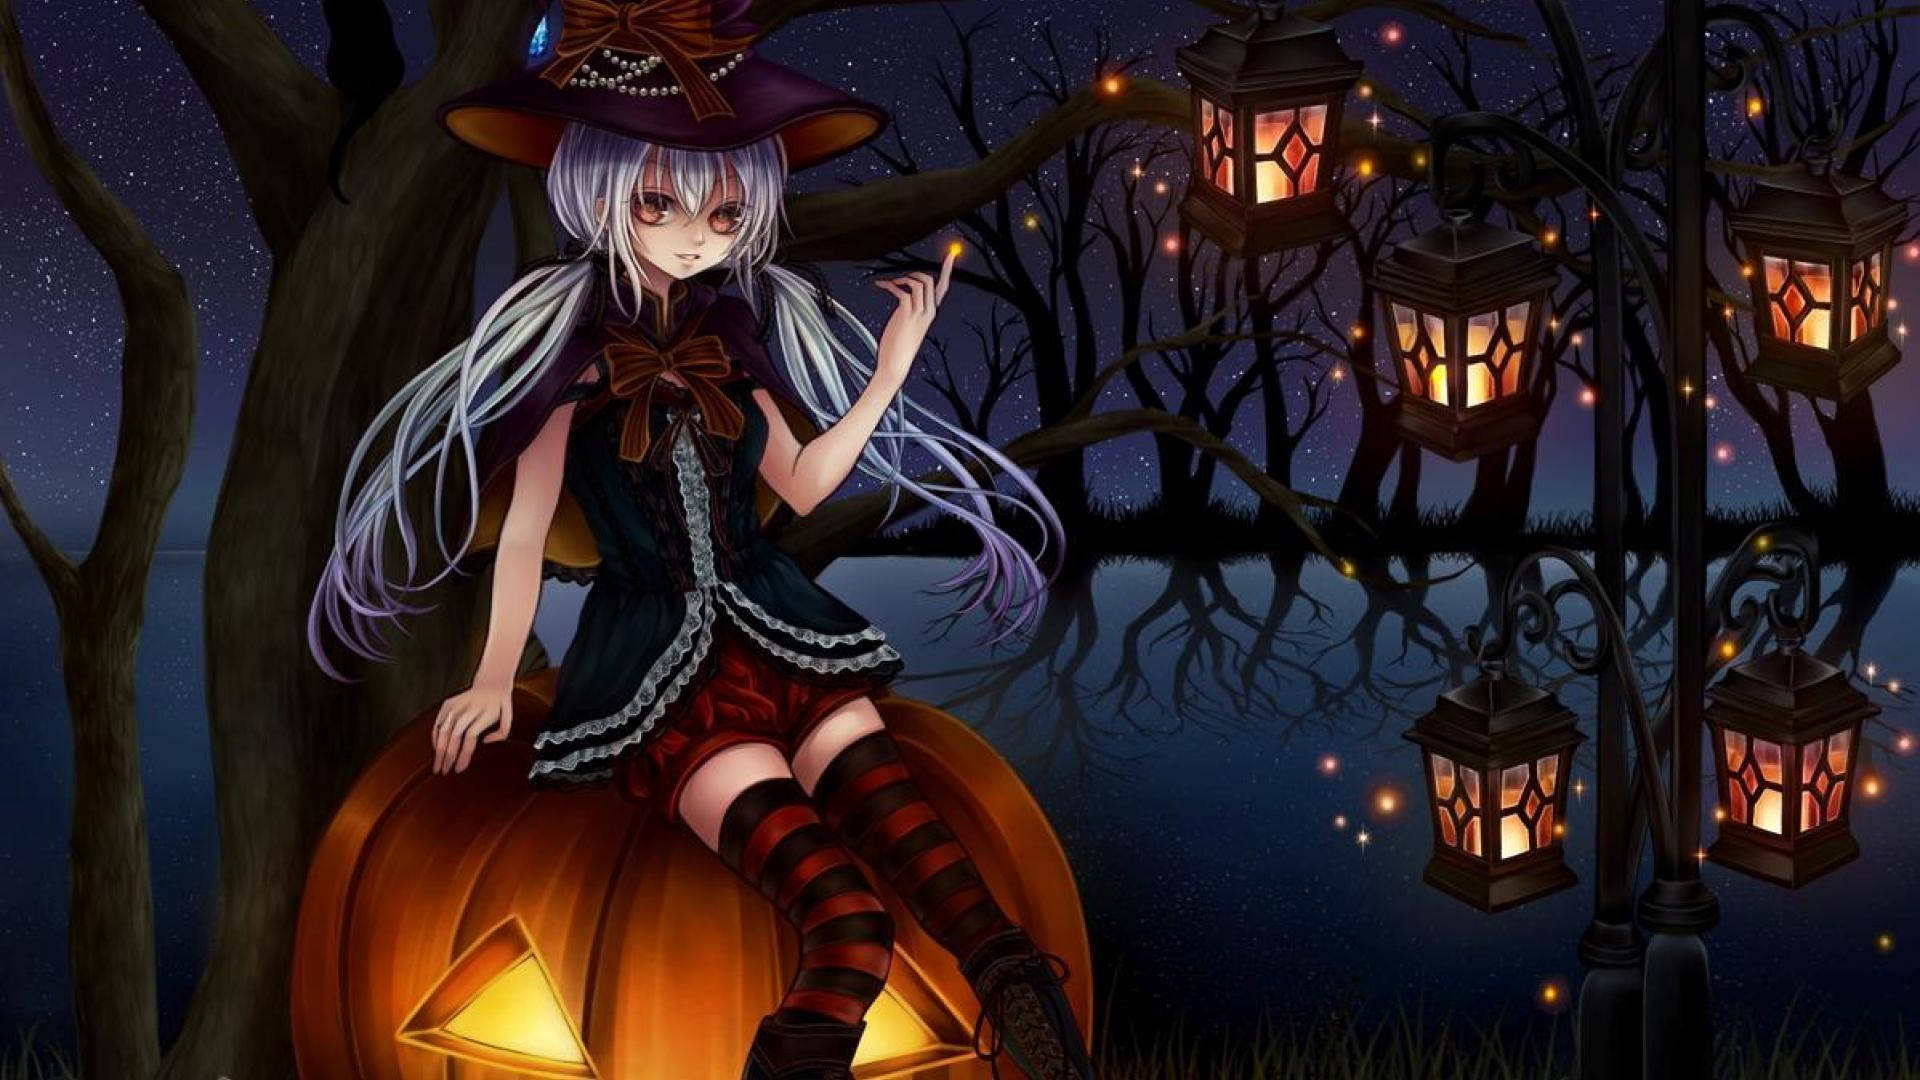 Gambar Anime With Girl On Pumpkin